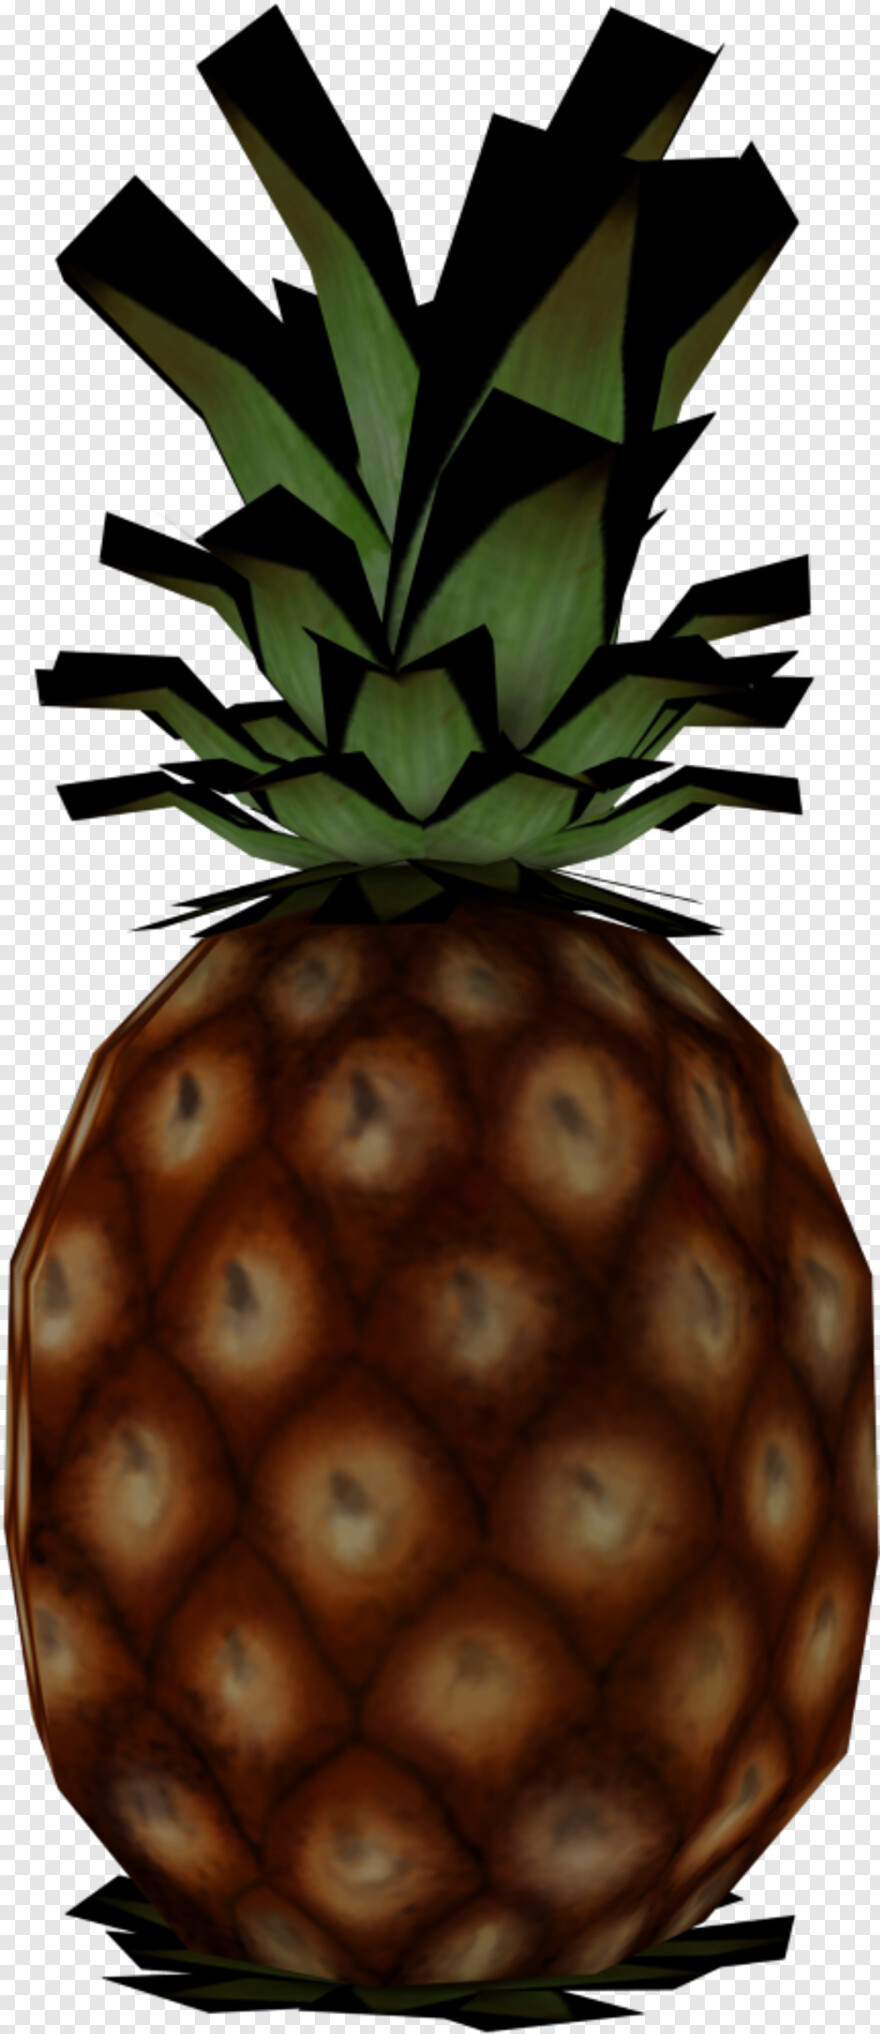 pineapple # 654190